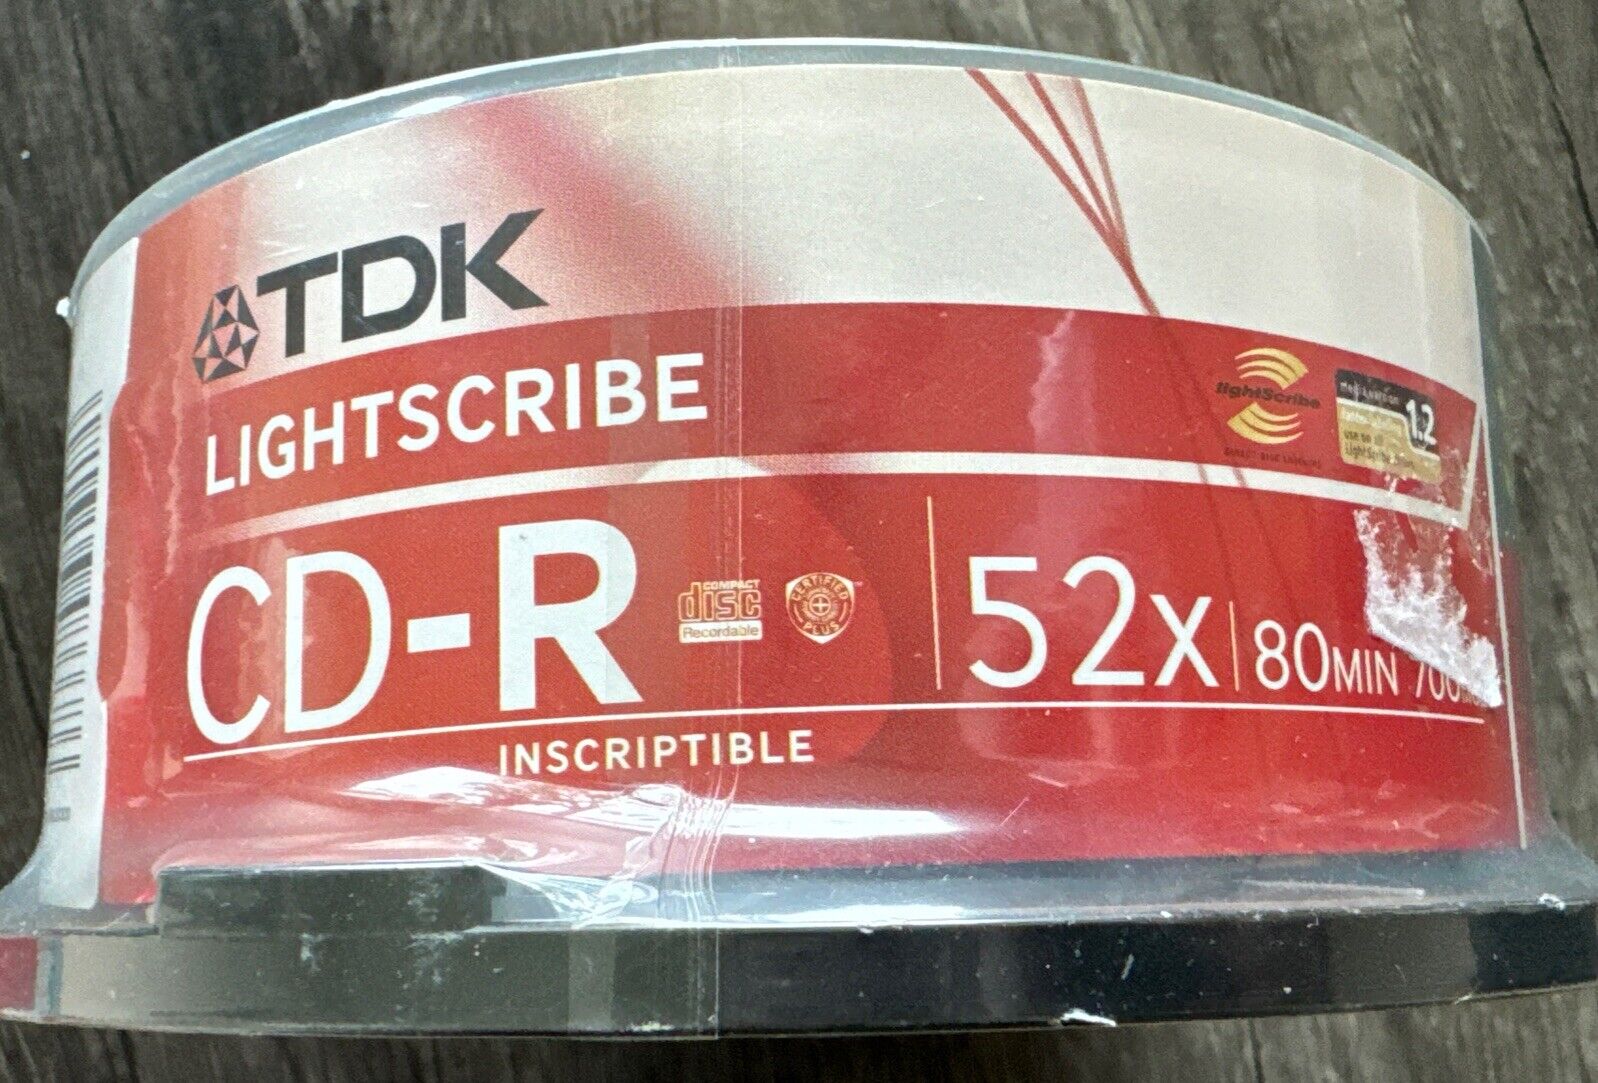 30 discs TDK LIGHTSCRIBE CD-R 52X 700MB 80 mins - Brand New, Custom-Burned Discs